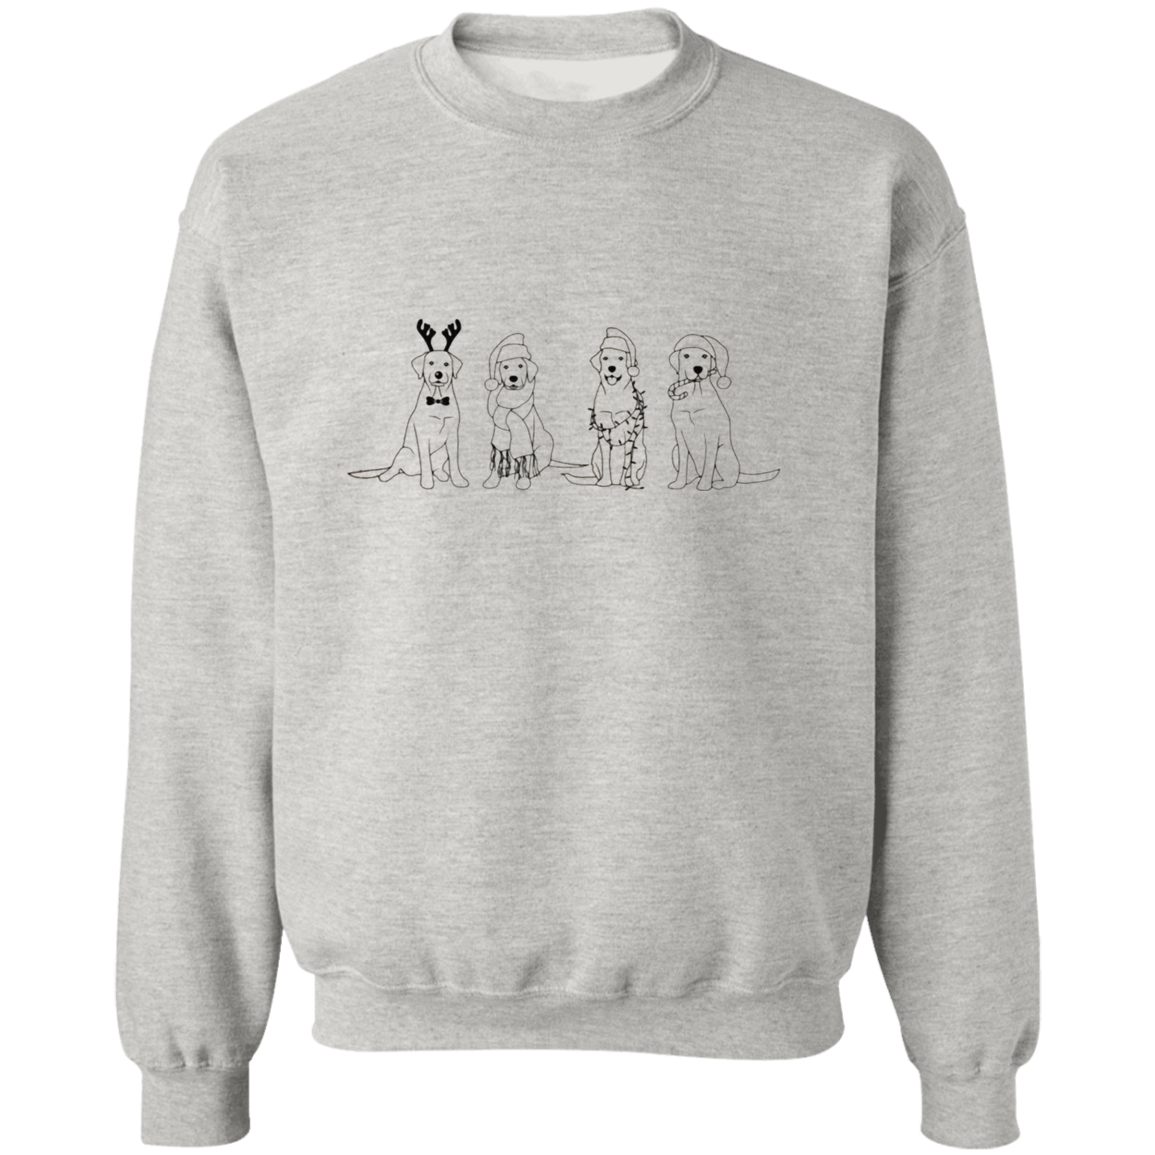 Labrador Christmas Sweatshirt